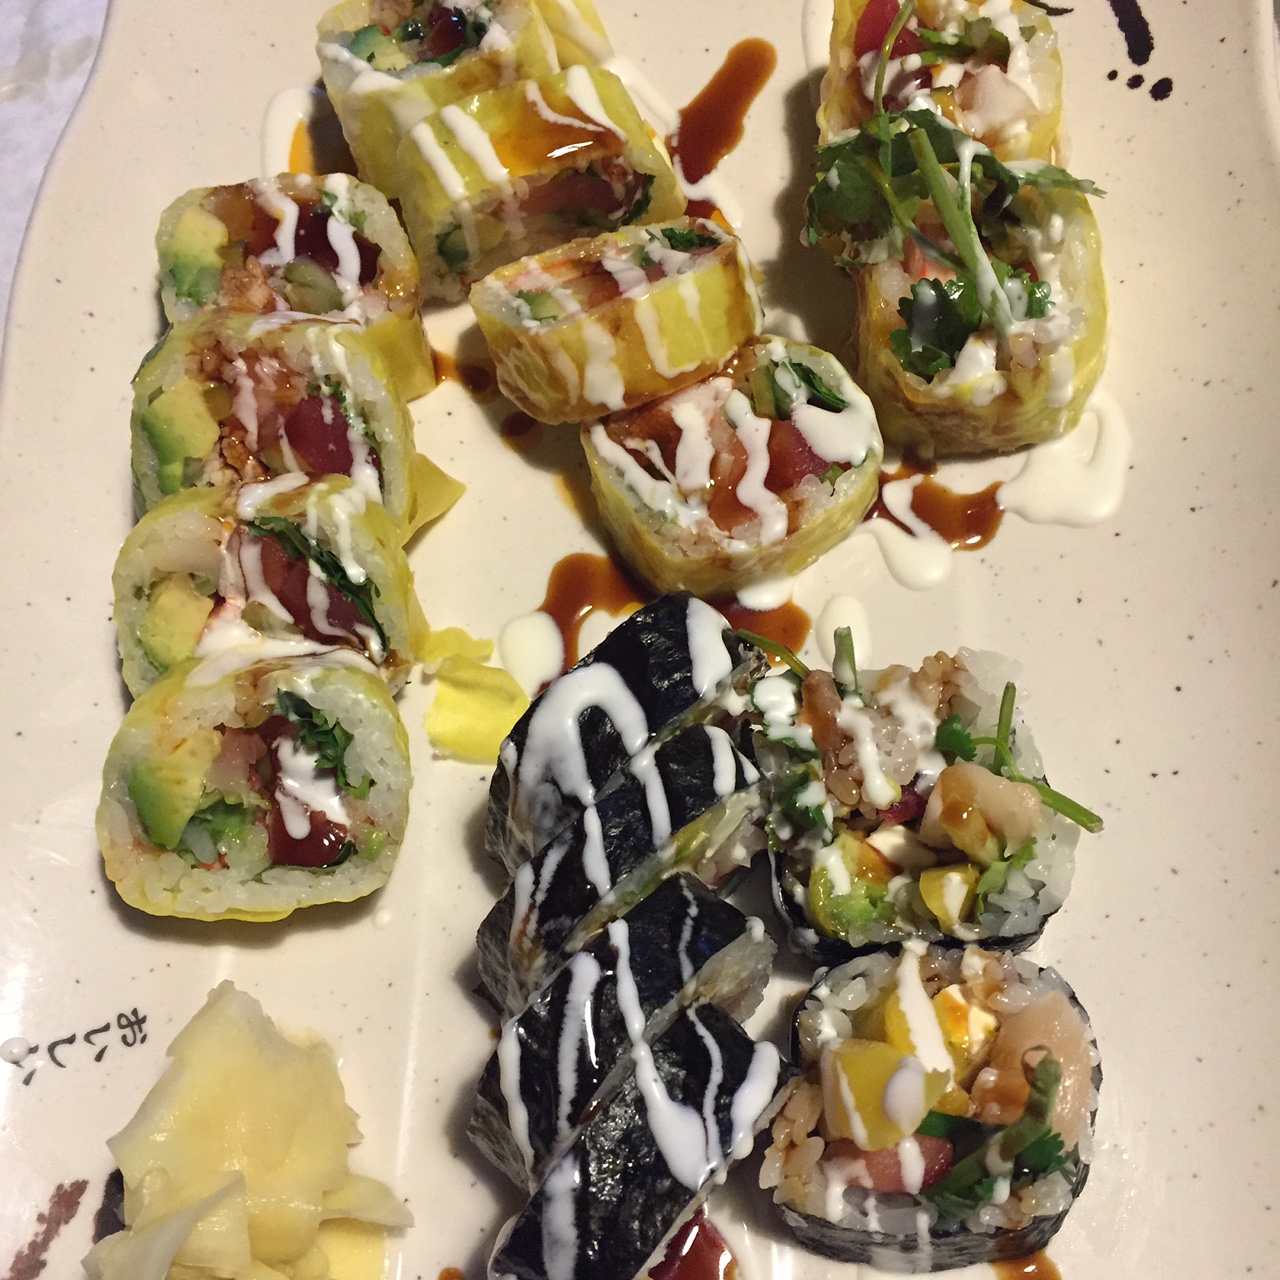 Hakuya Sushi Restaurant Review (Buffalo Grove IL, Chicago Suburbs)